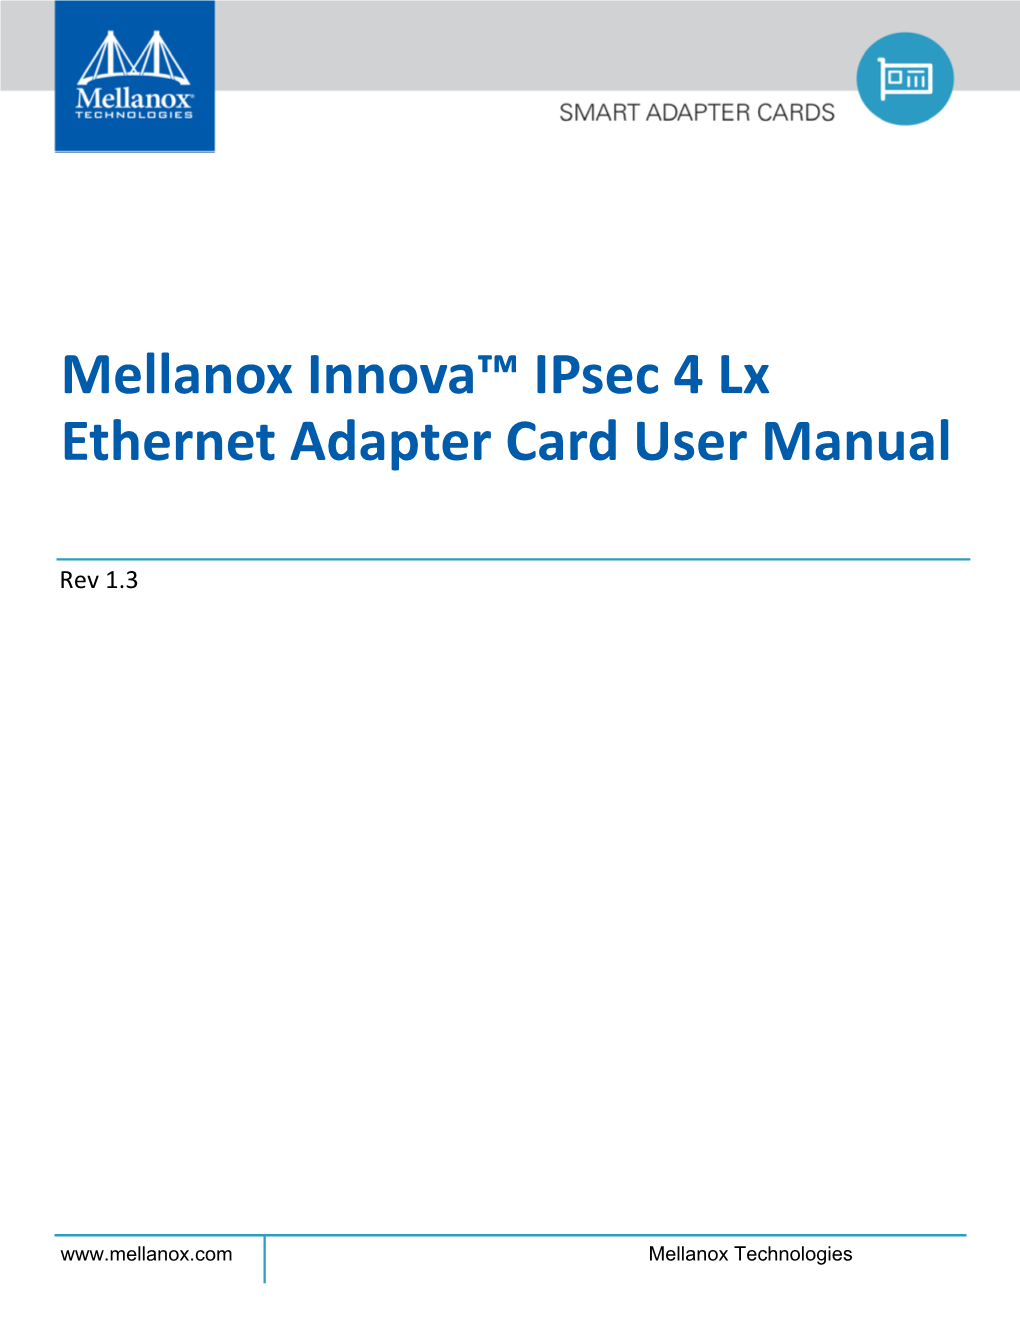 Mellanox Innova™ Ipsec 4 Lx Ethernet Adapter Card User Manual